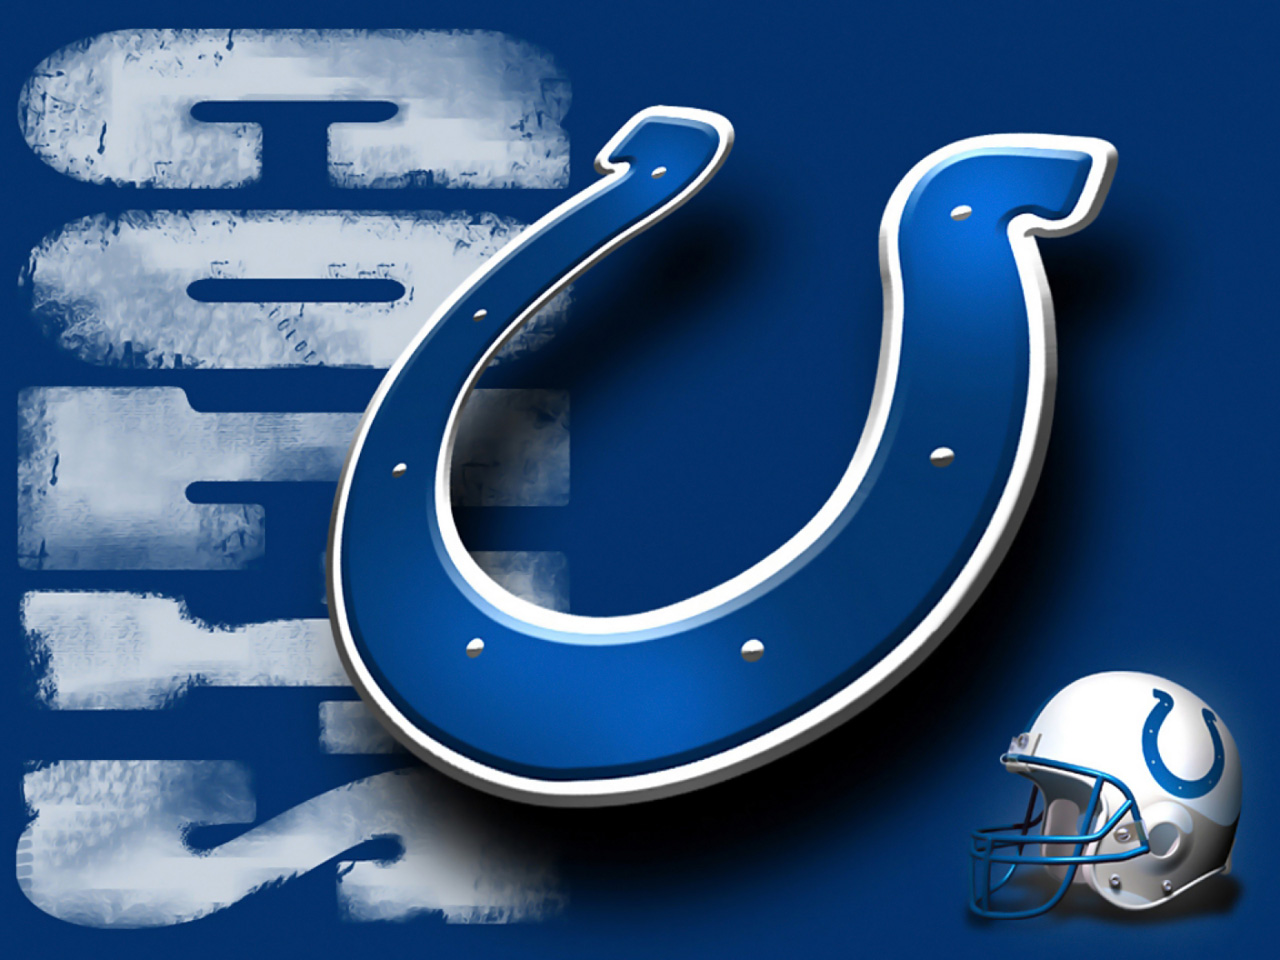 Colts Logo Wallpaper images  pictures - NearPics